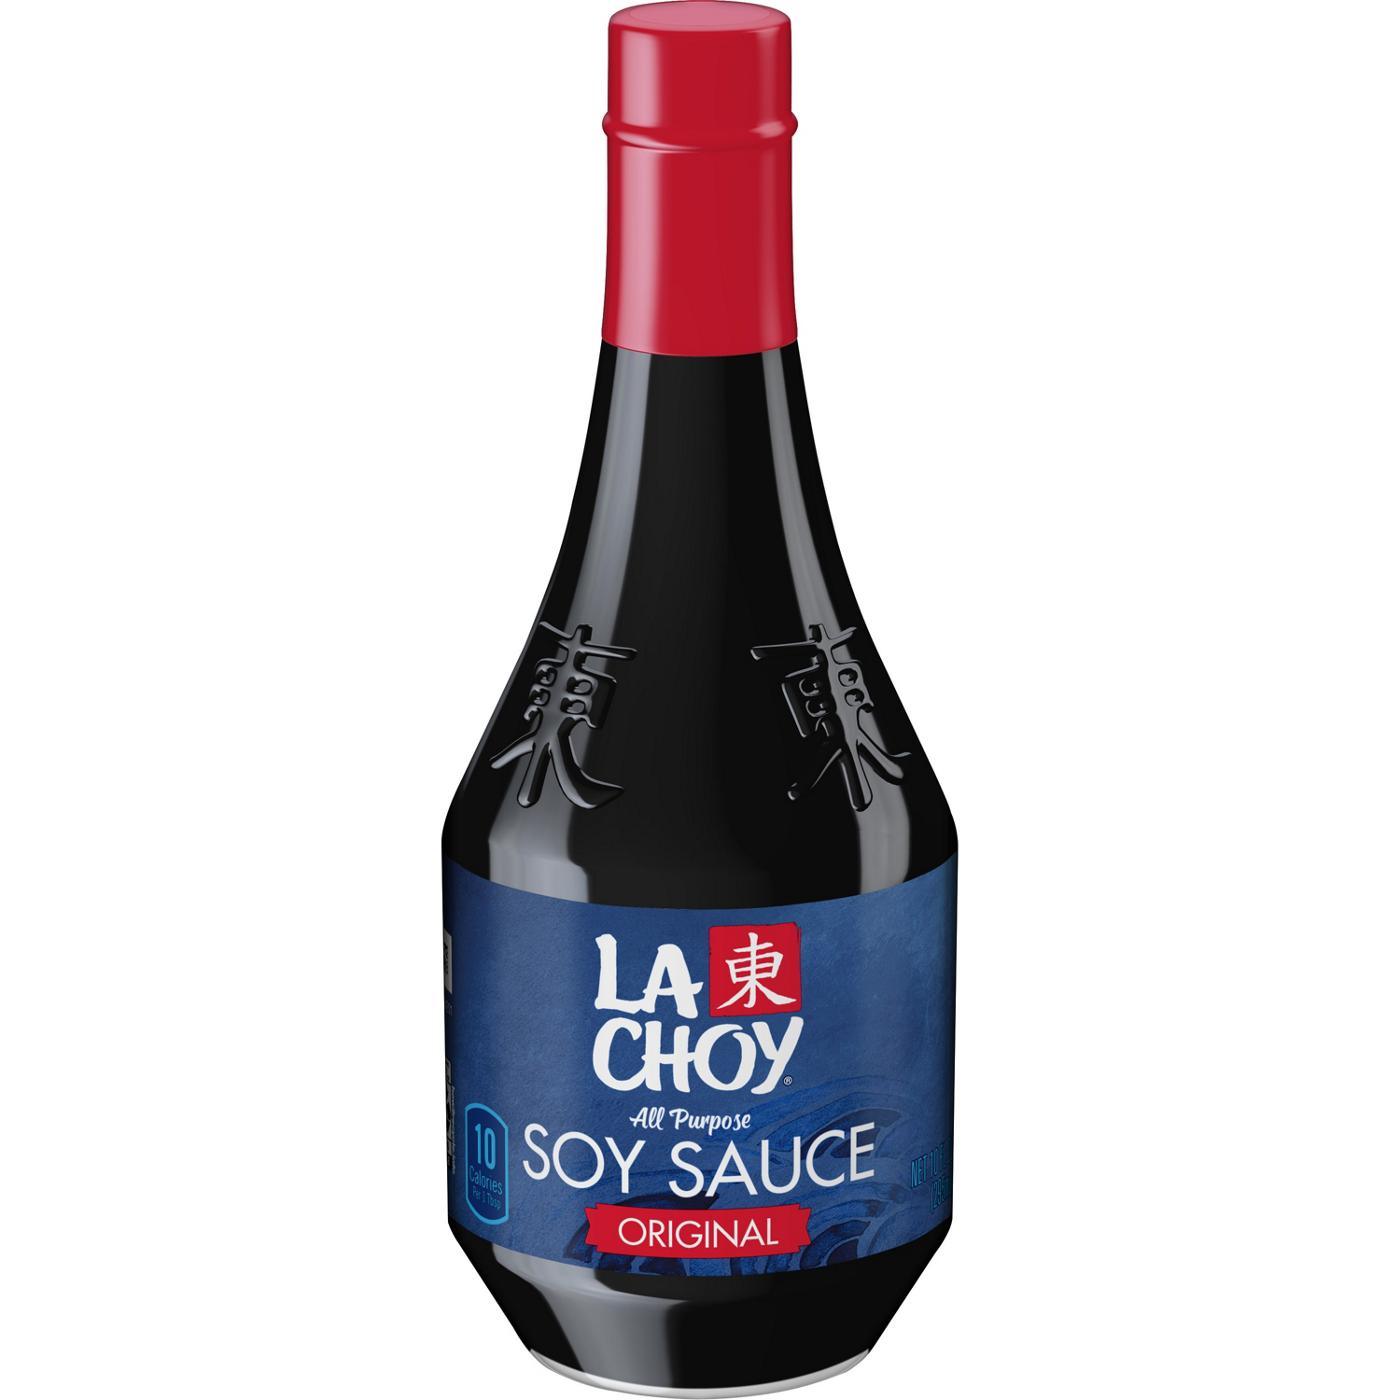 La Choy Soy Sauce; image 1 of 5